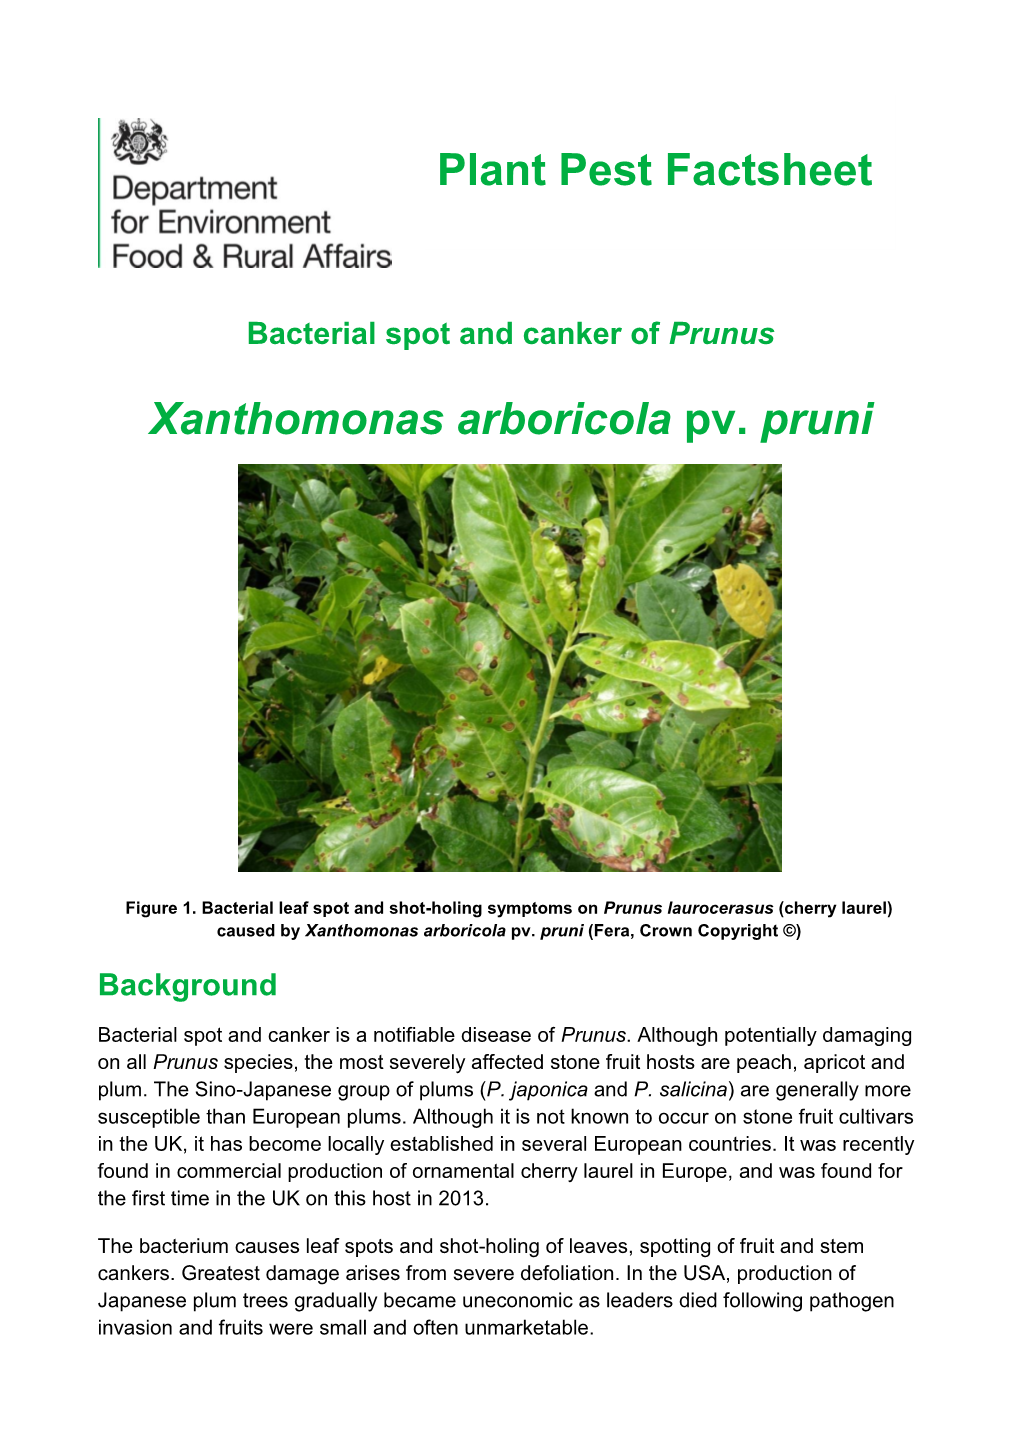 Xanthomonas Arboricola Pv. Pruni Plant Pest Factsheet